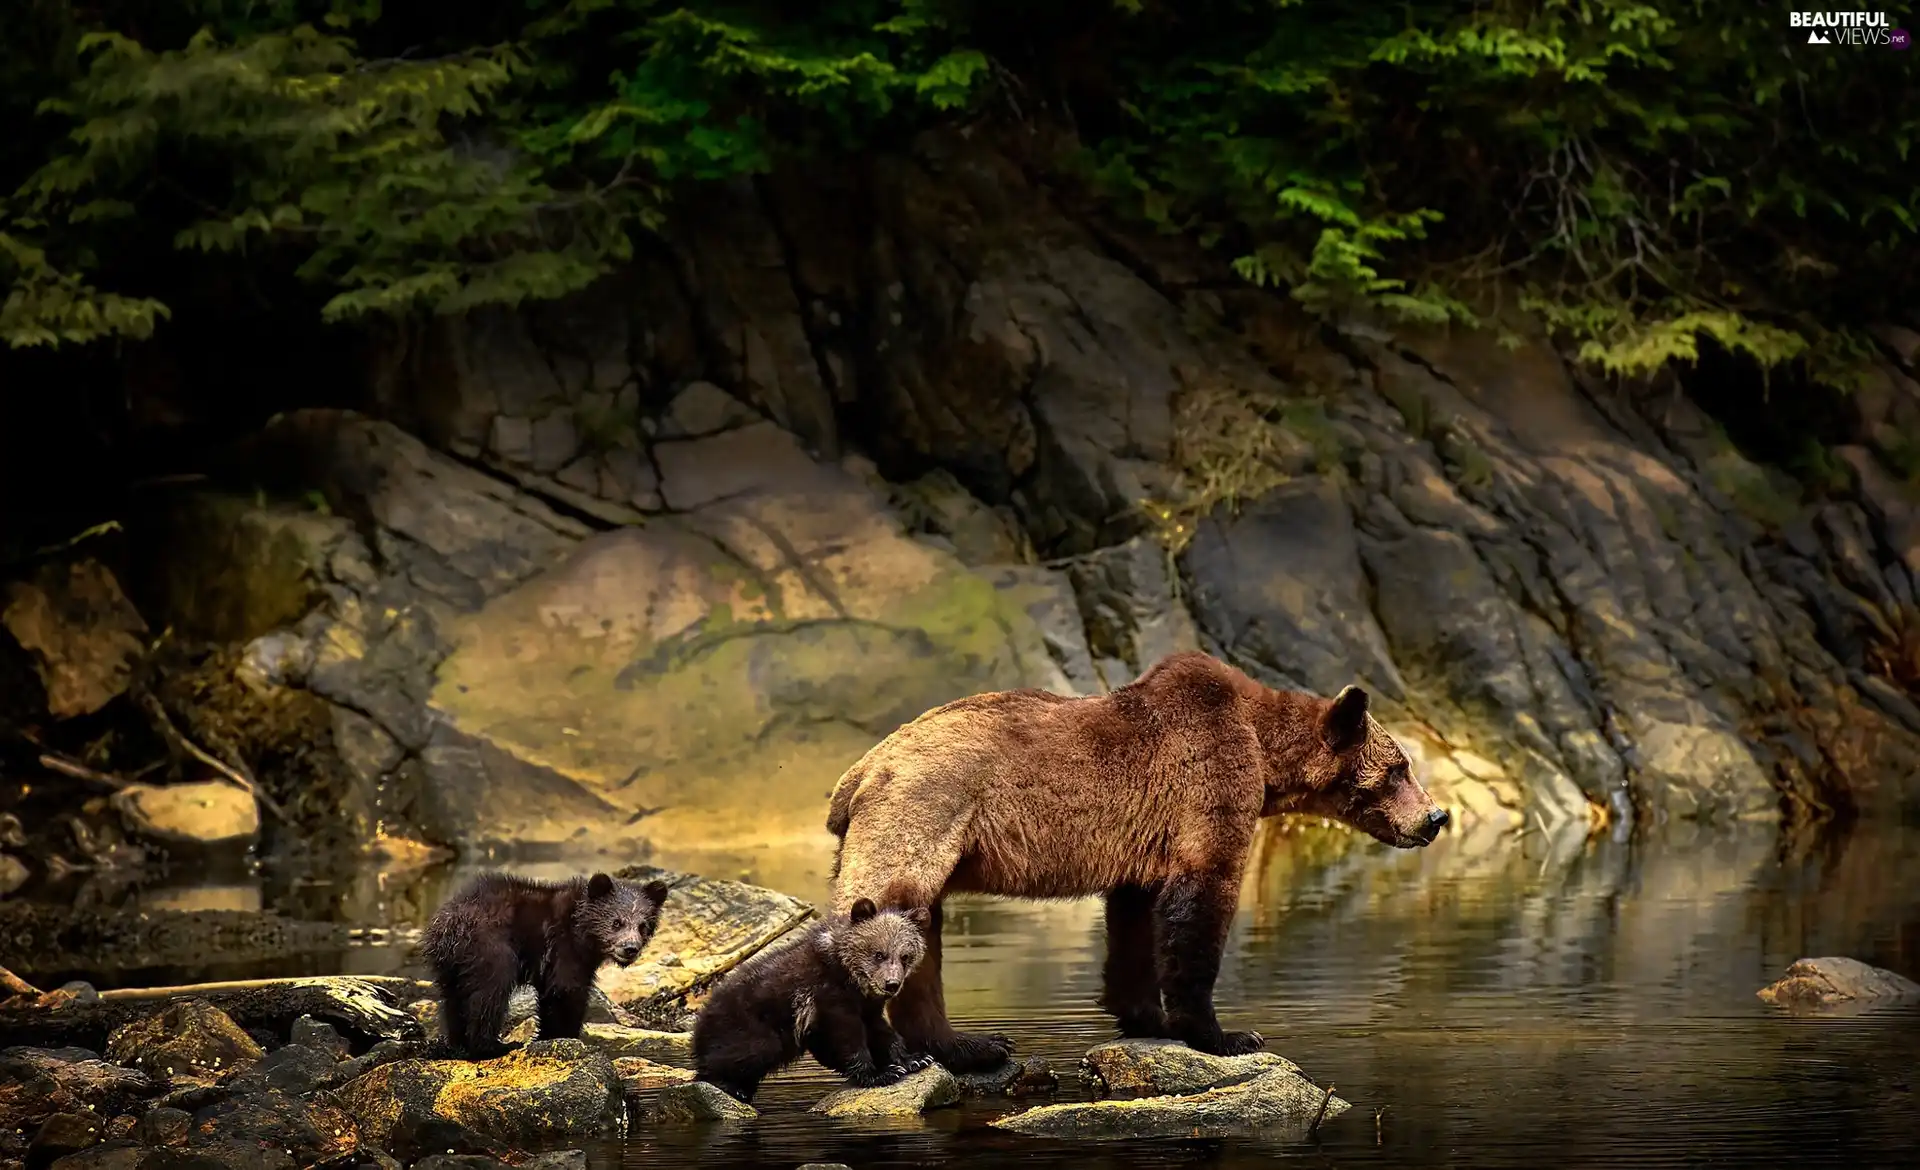 rocks, water, she-bear, young, Brown bear